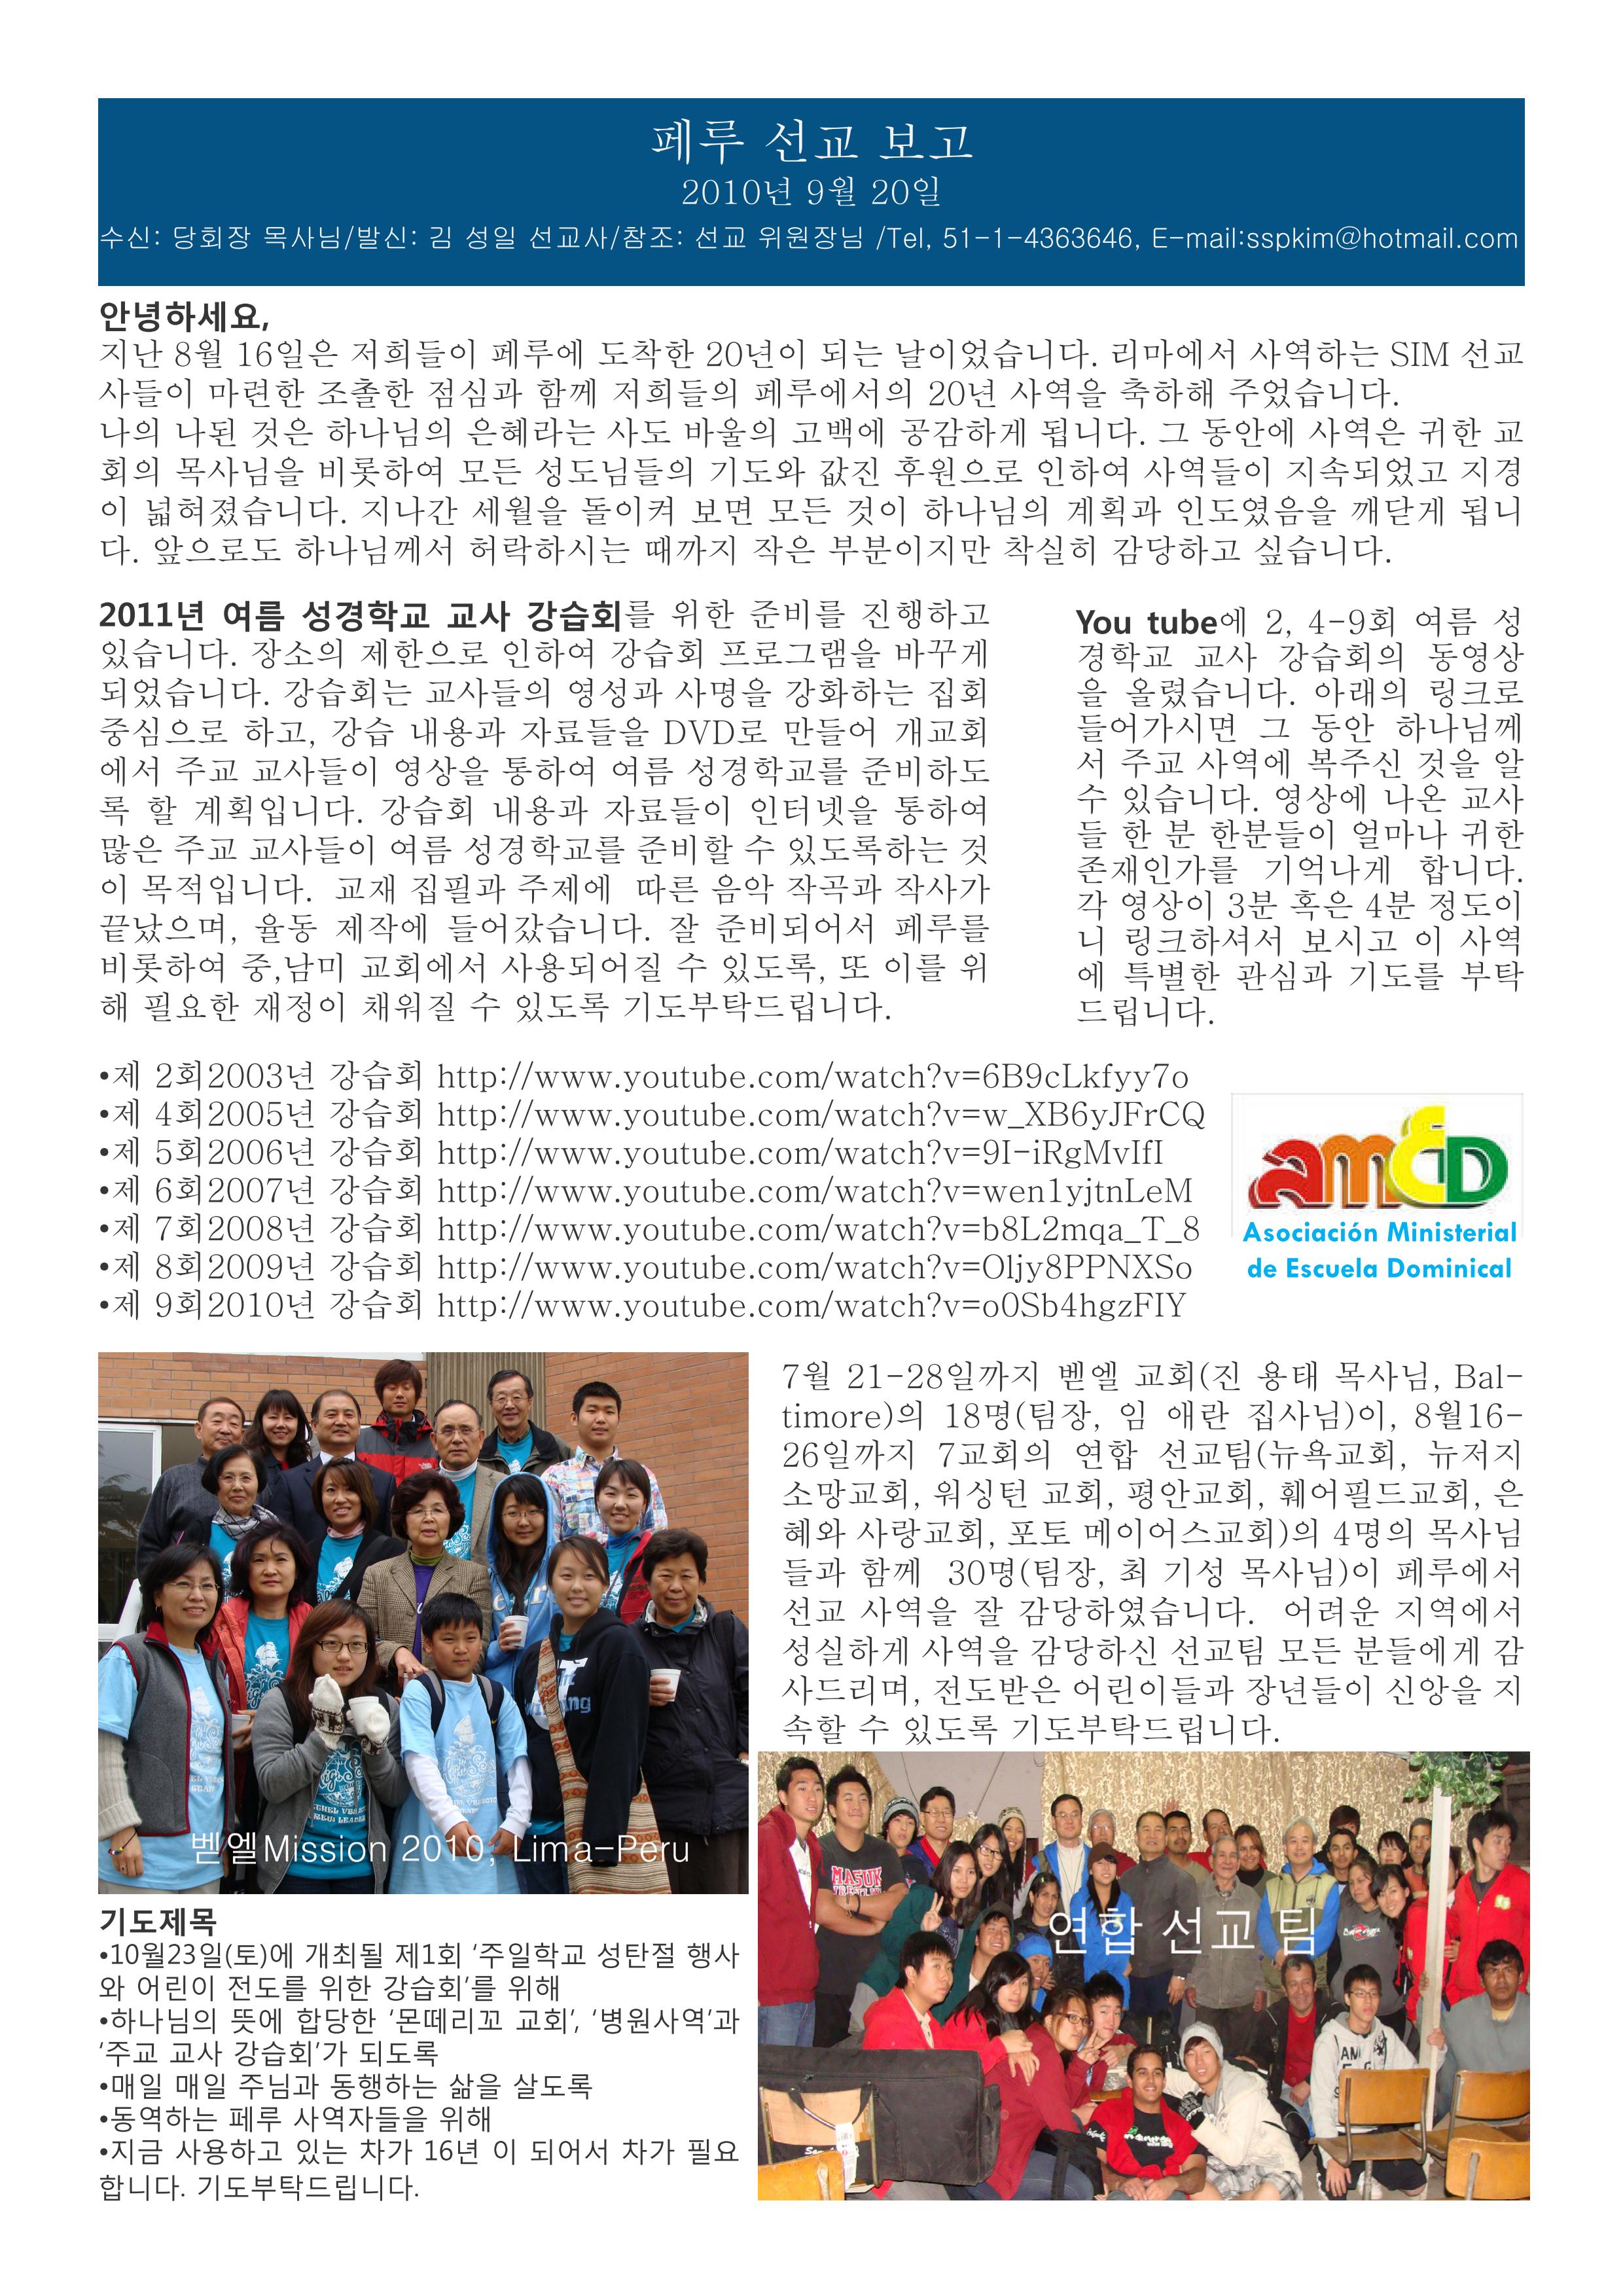 Mission Report 2010-09-20_01.jpg : 페루 선교보고 - 김성일선교사